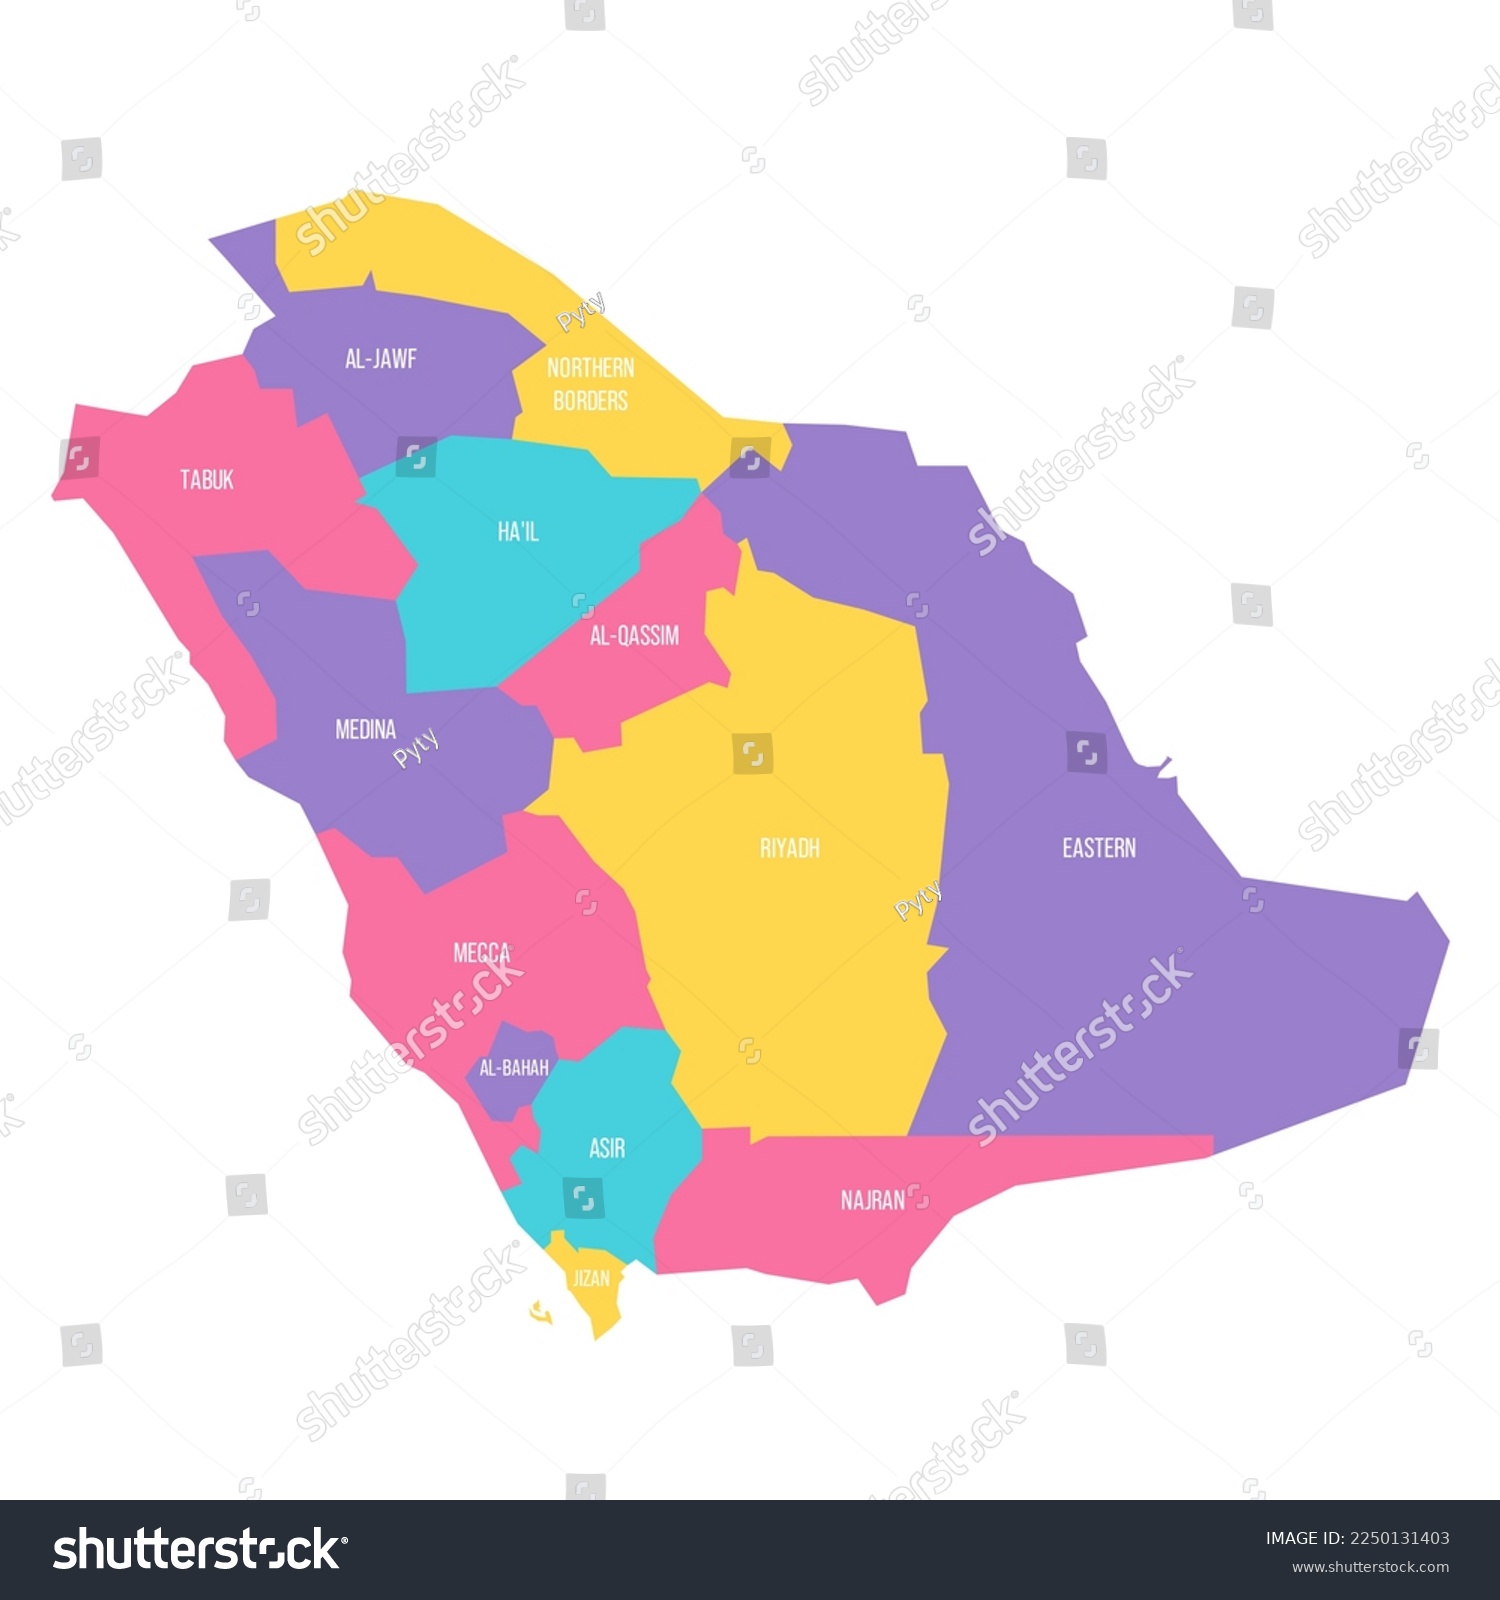 Saudi Arabia political map of administrative - Royalty Free Stock ...